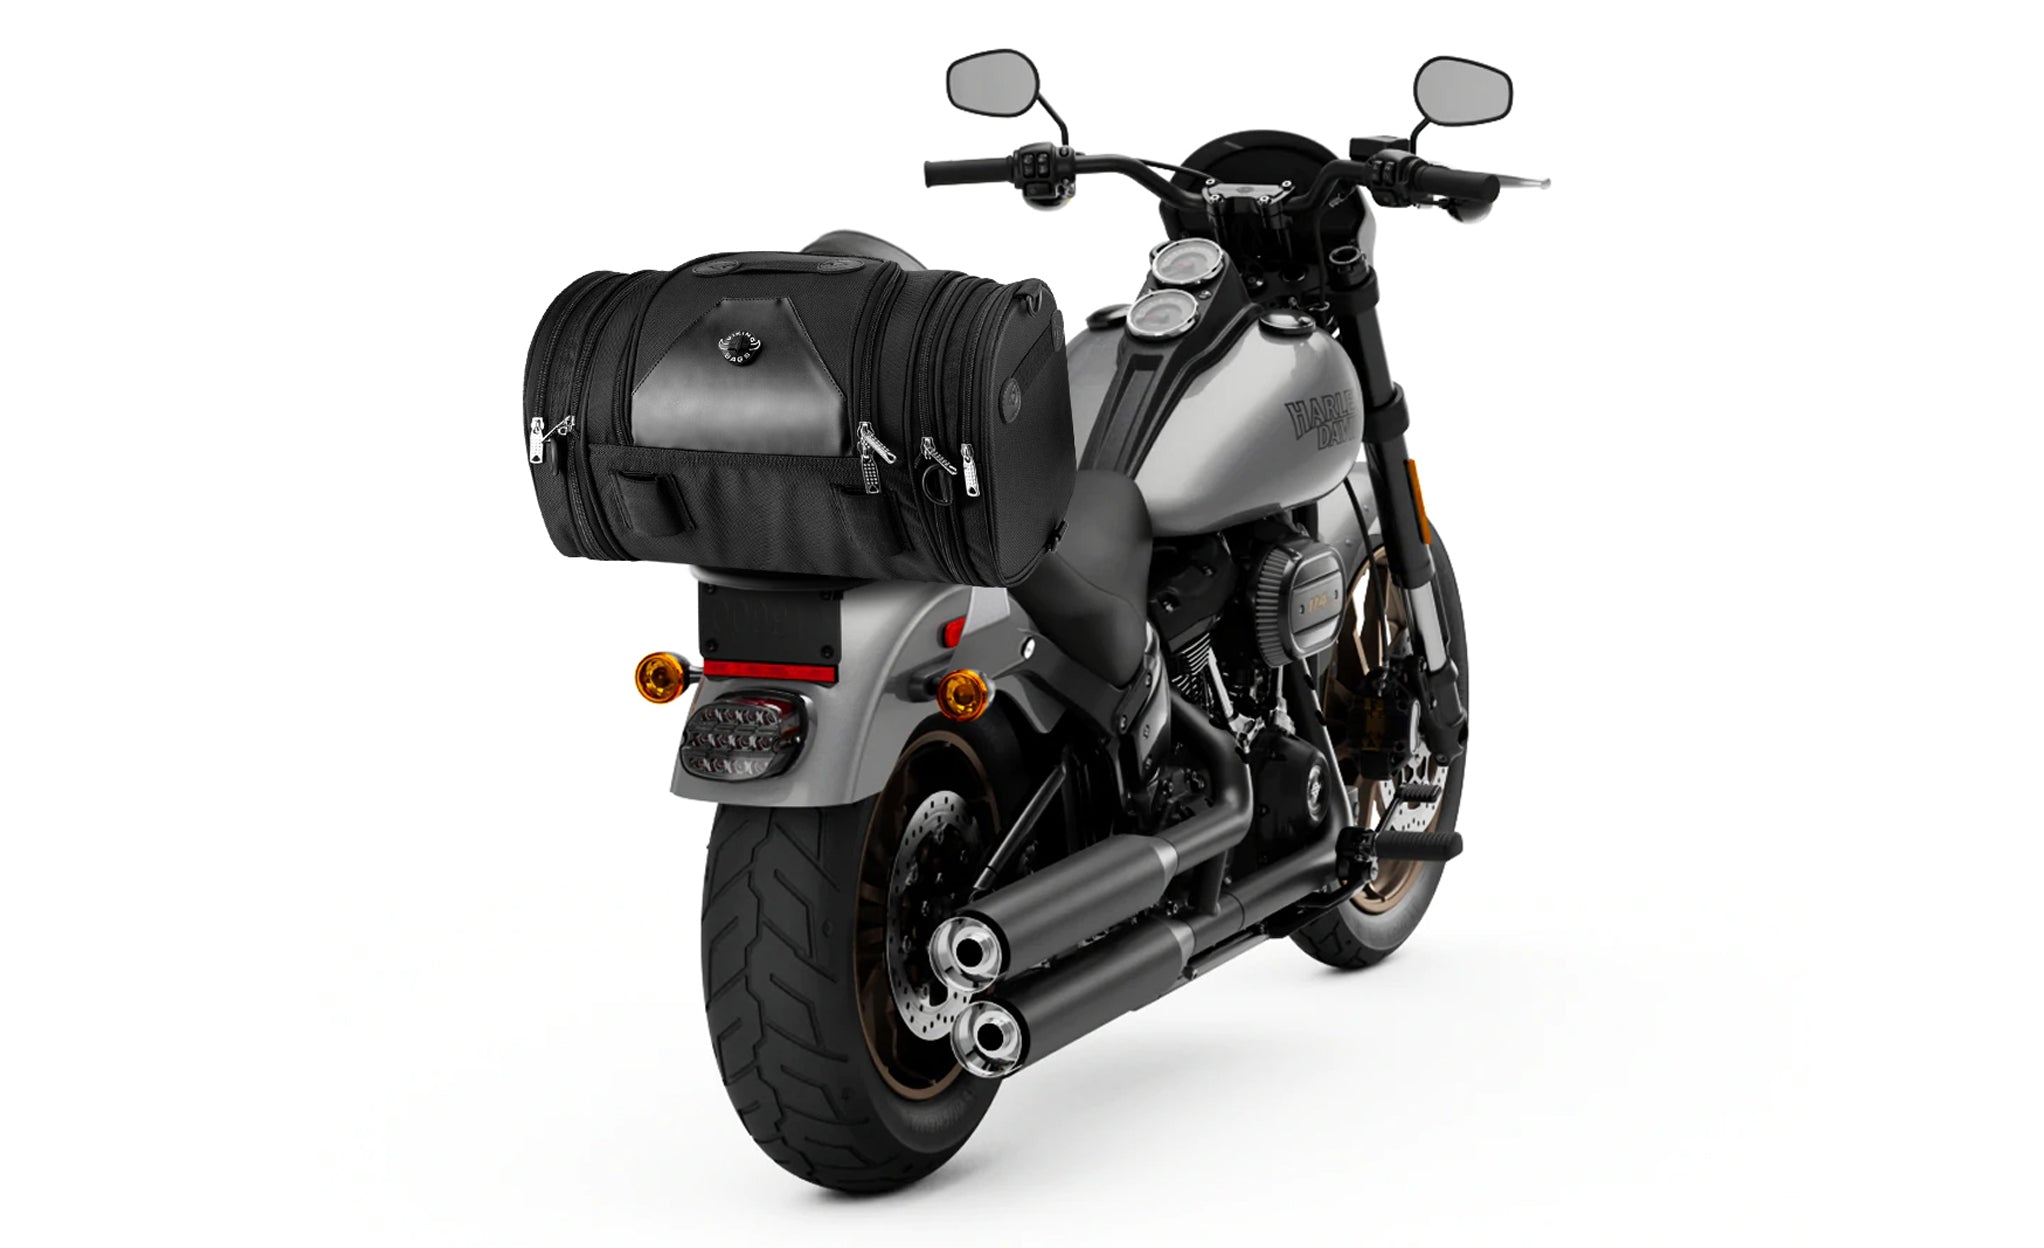 Viking Axwell Small Suzuki Motorcycle Sissy Bar Bag Bag on Bike View @expand